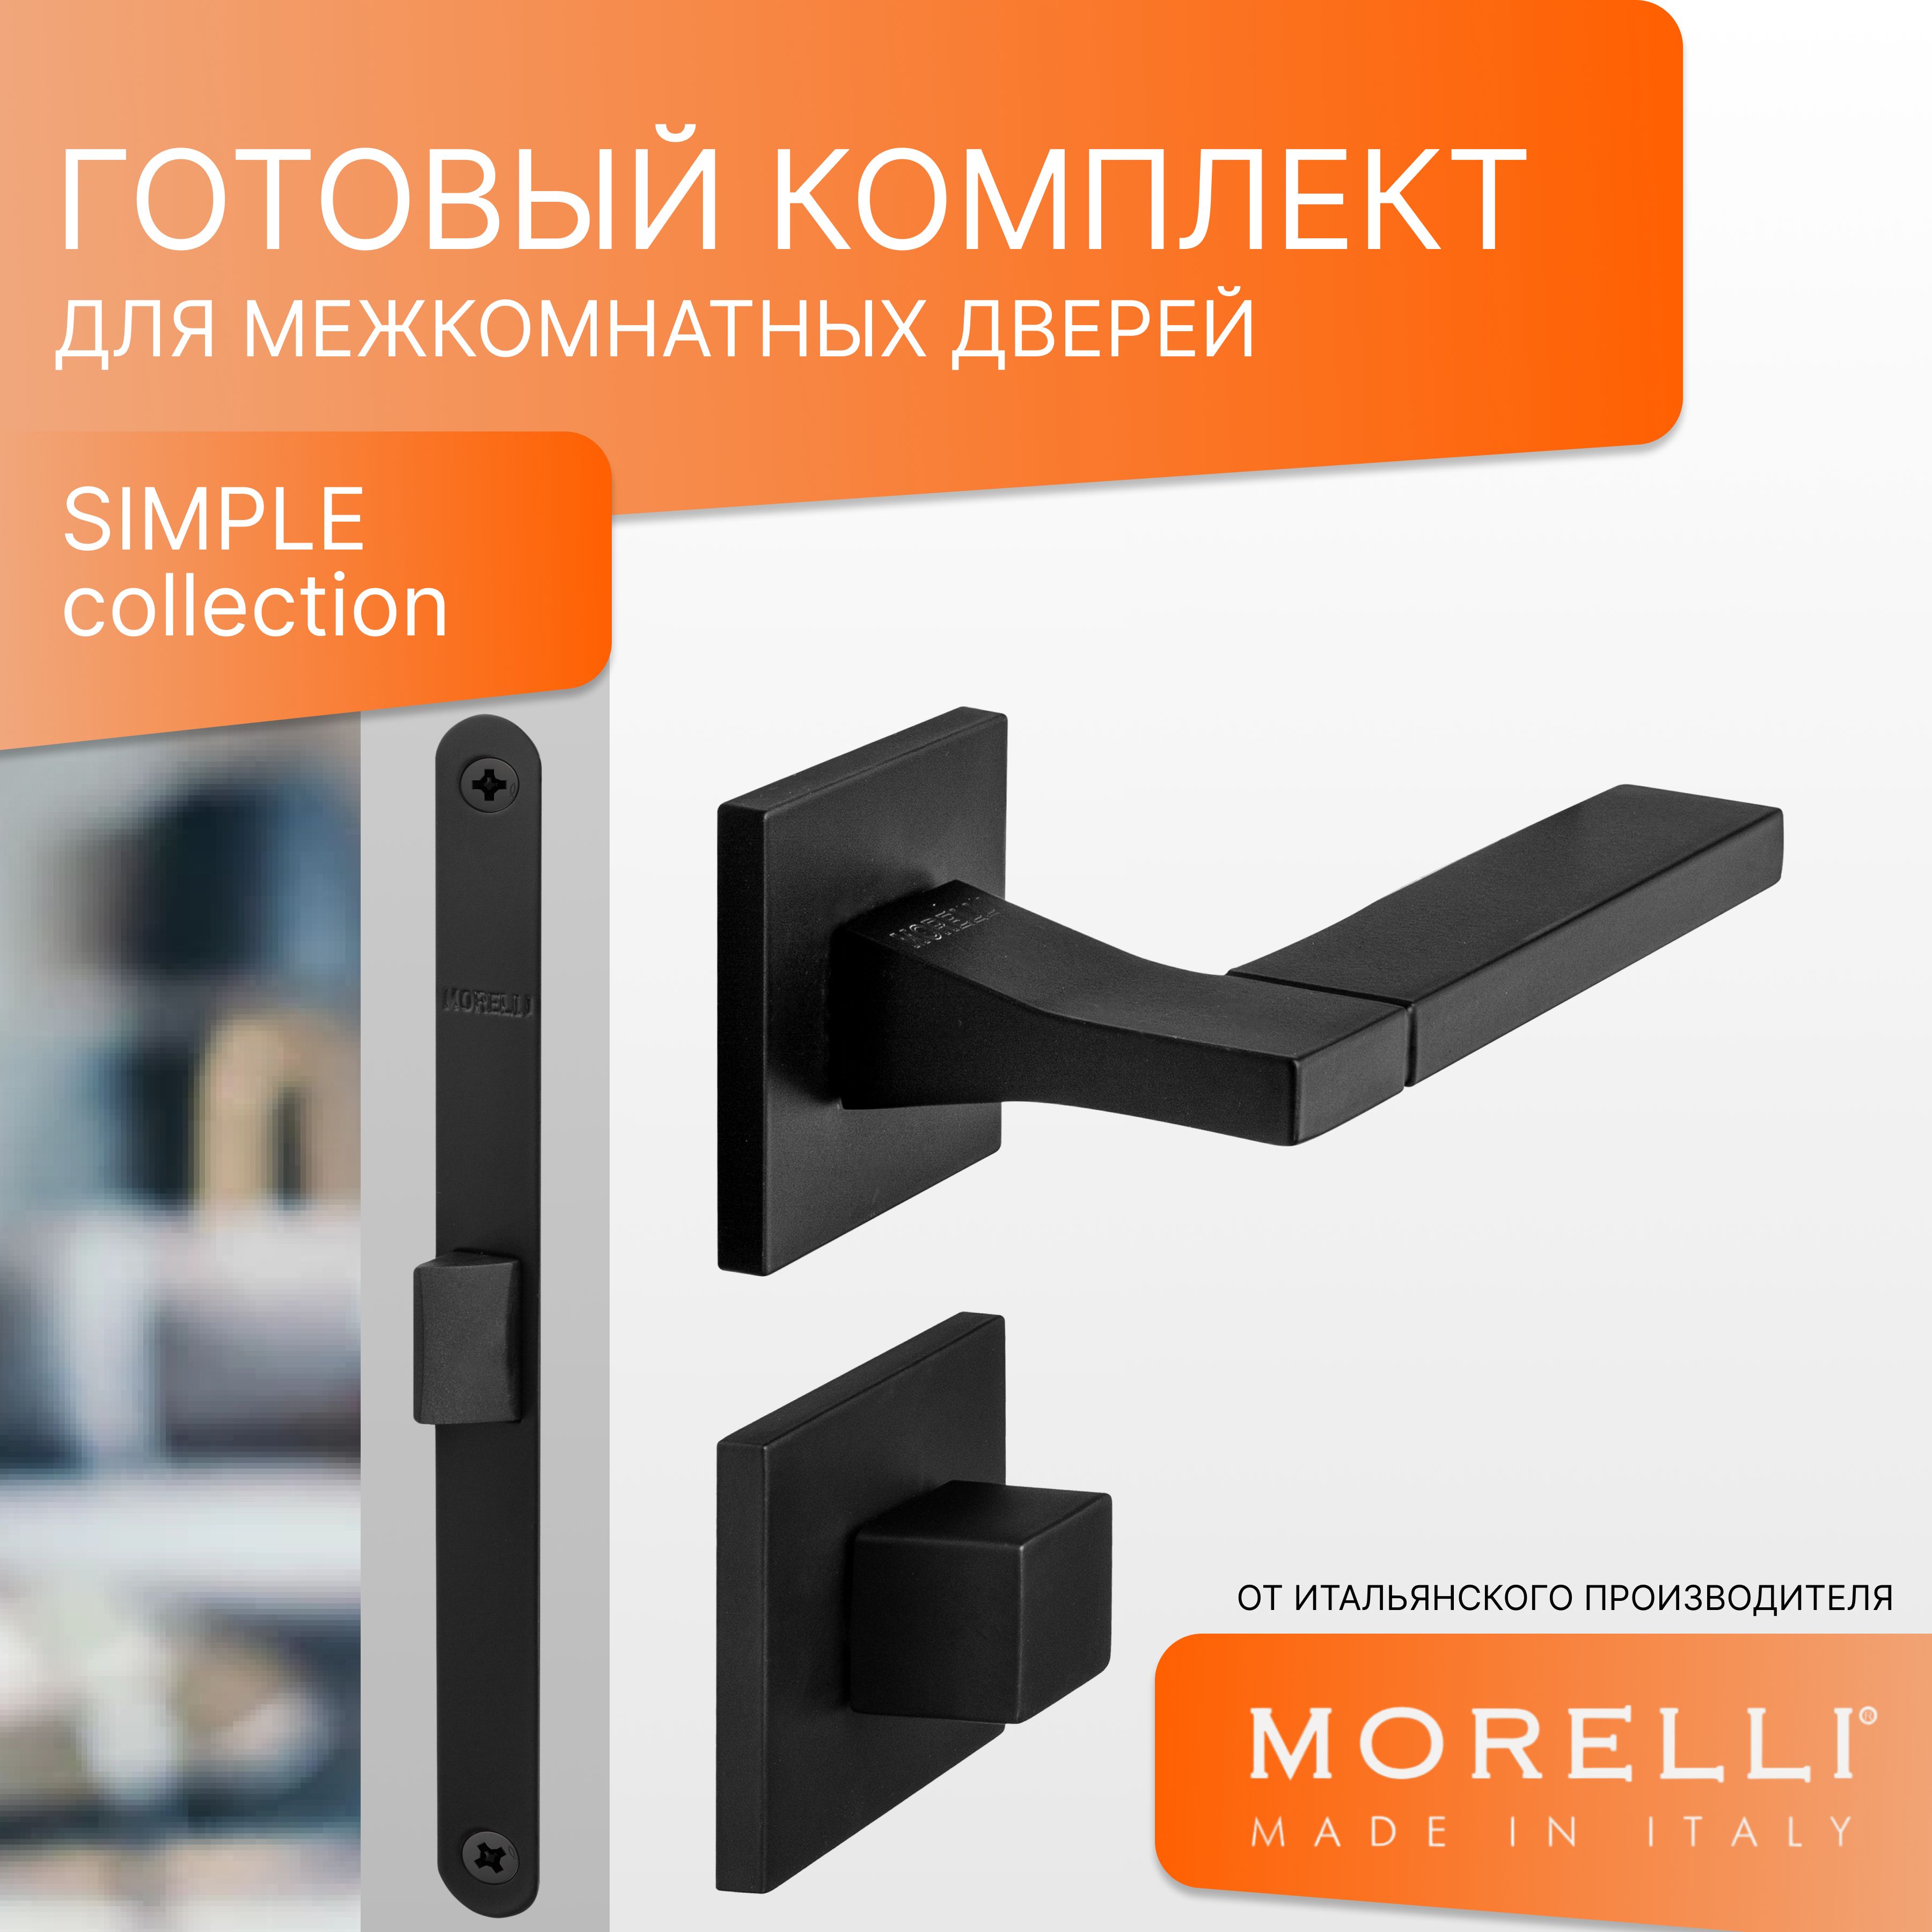 Комплект для двери MORELLI ручки MH 47 S6 BL + фиксатор + замок комплект для раздвижных дверей morelli